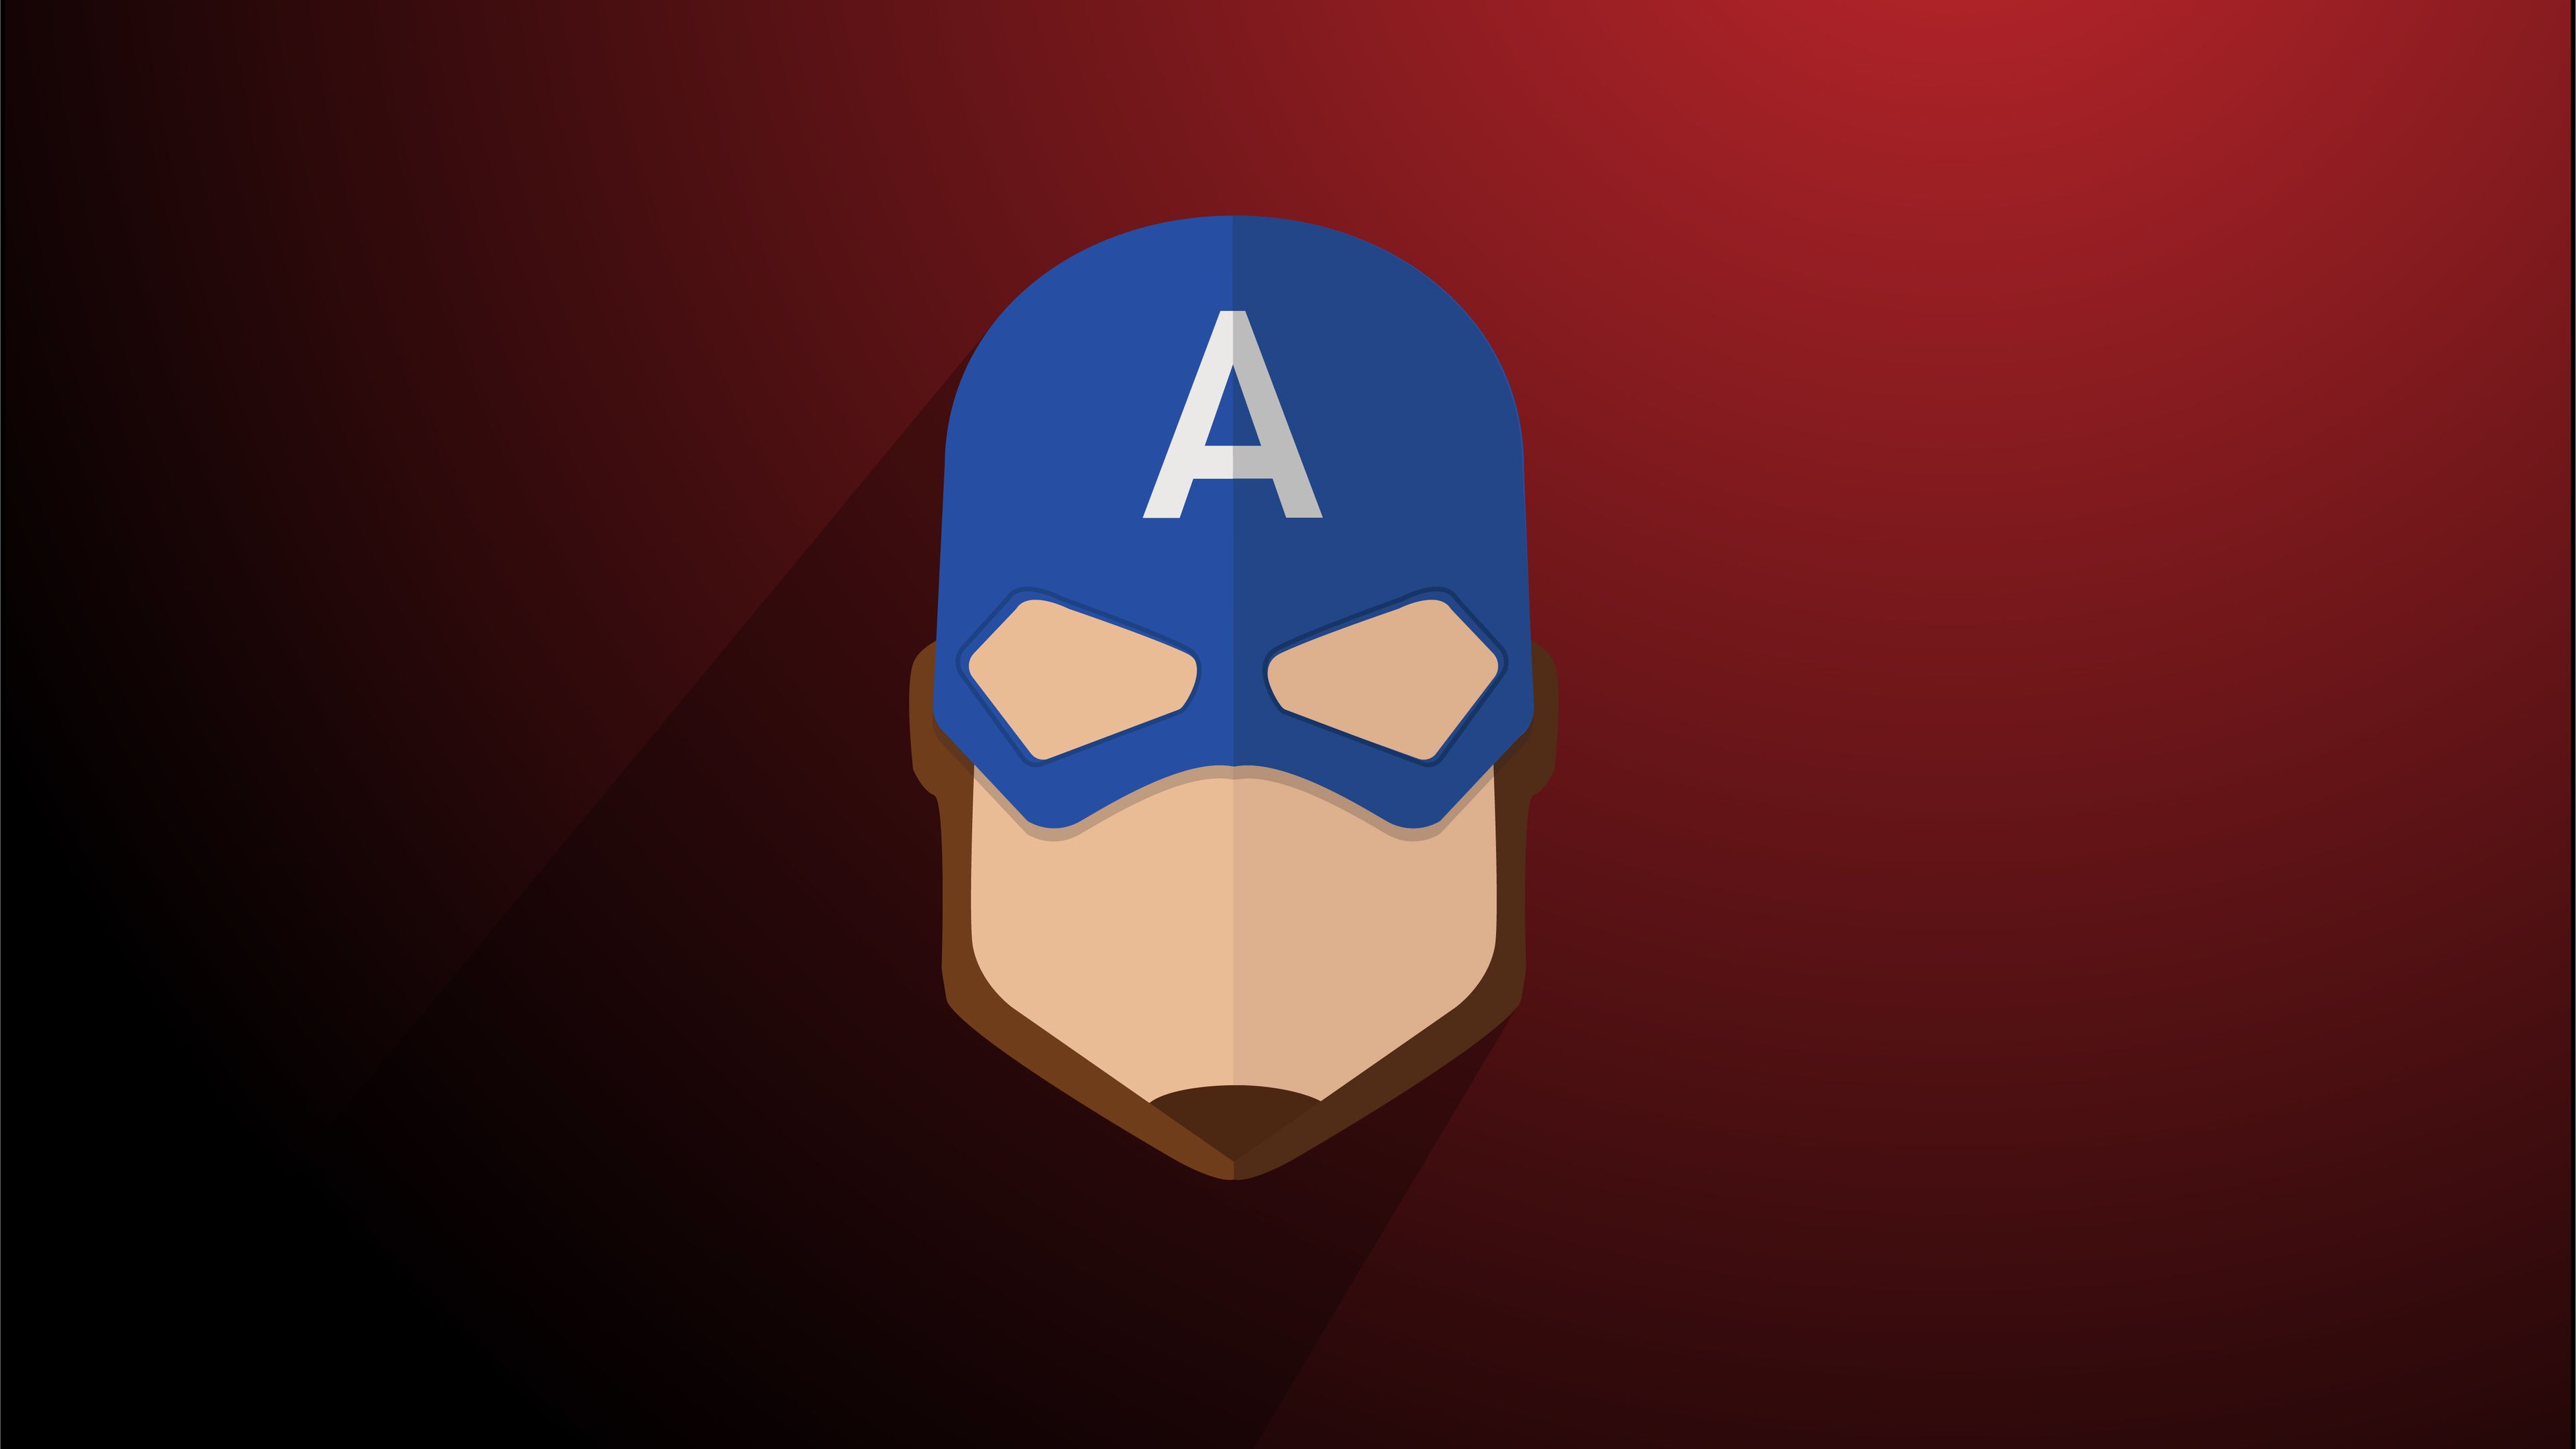 Captain America Minimalist 4k superheroes wallpaper, minimalist wallpaper, minimalism wallpaper. Captain america wallpaper, Avengers painting, Marvel wallpaper